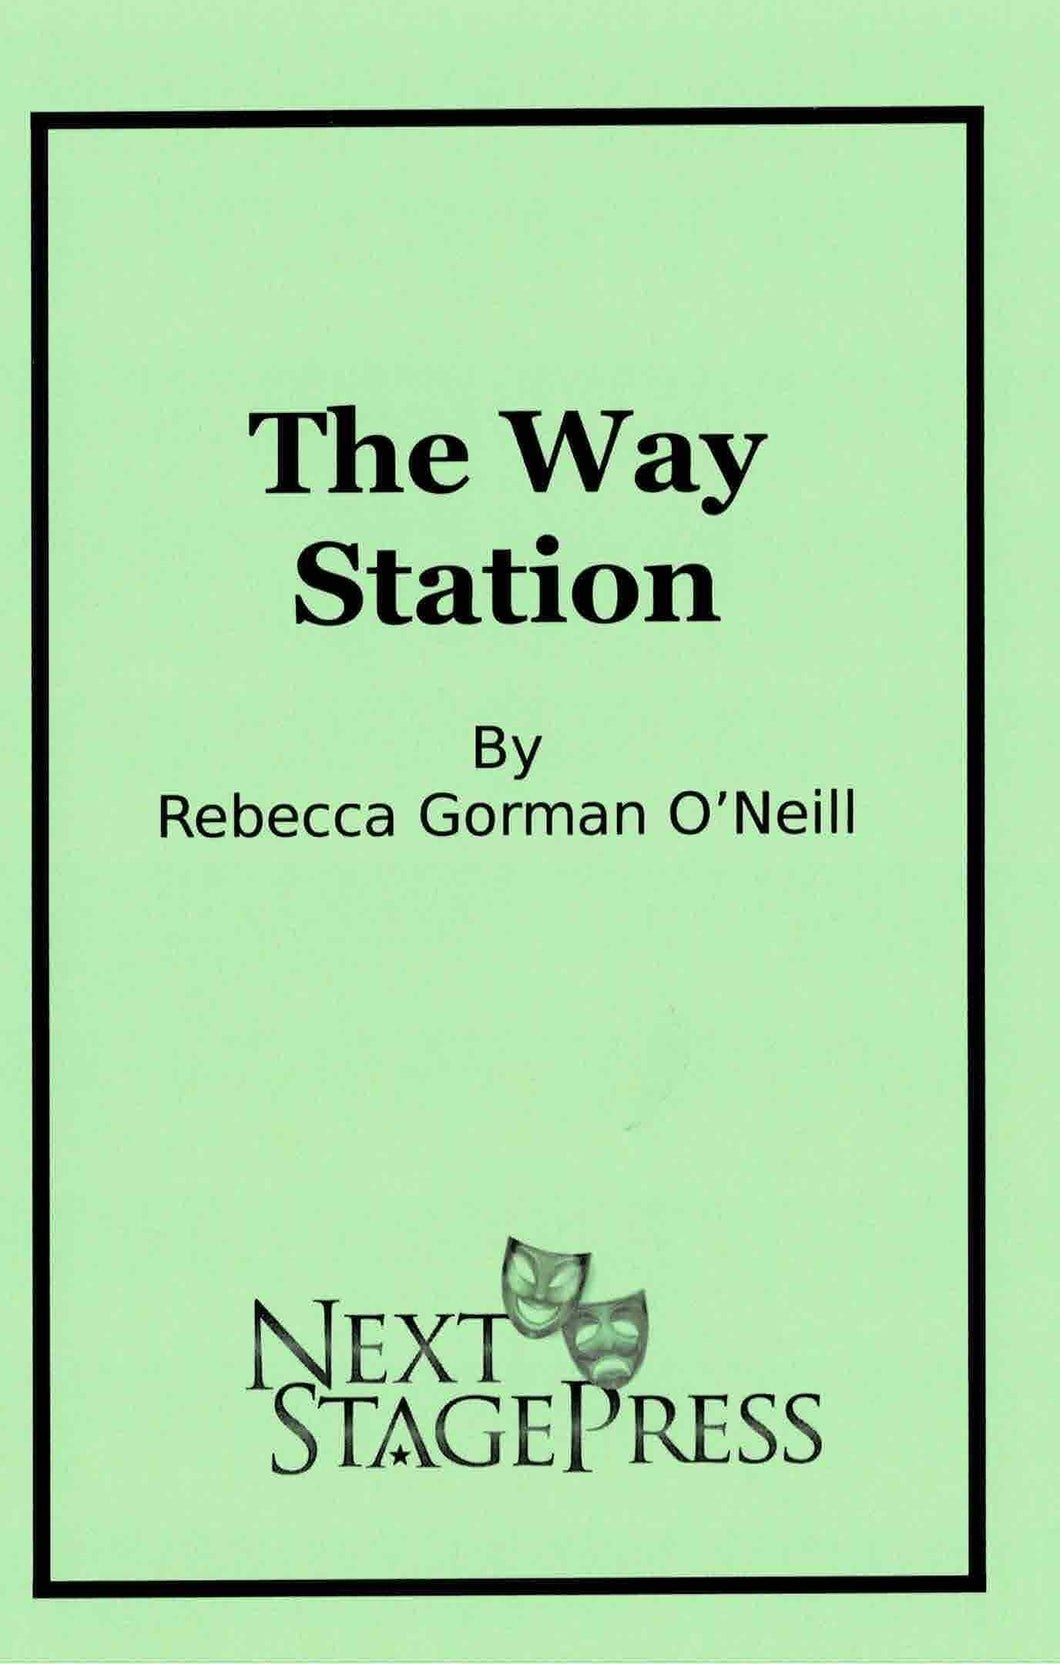 THE WAY STATION by Rebecca Gorman O'Neill - Digital version